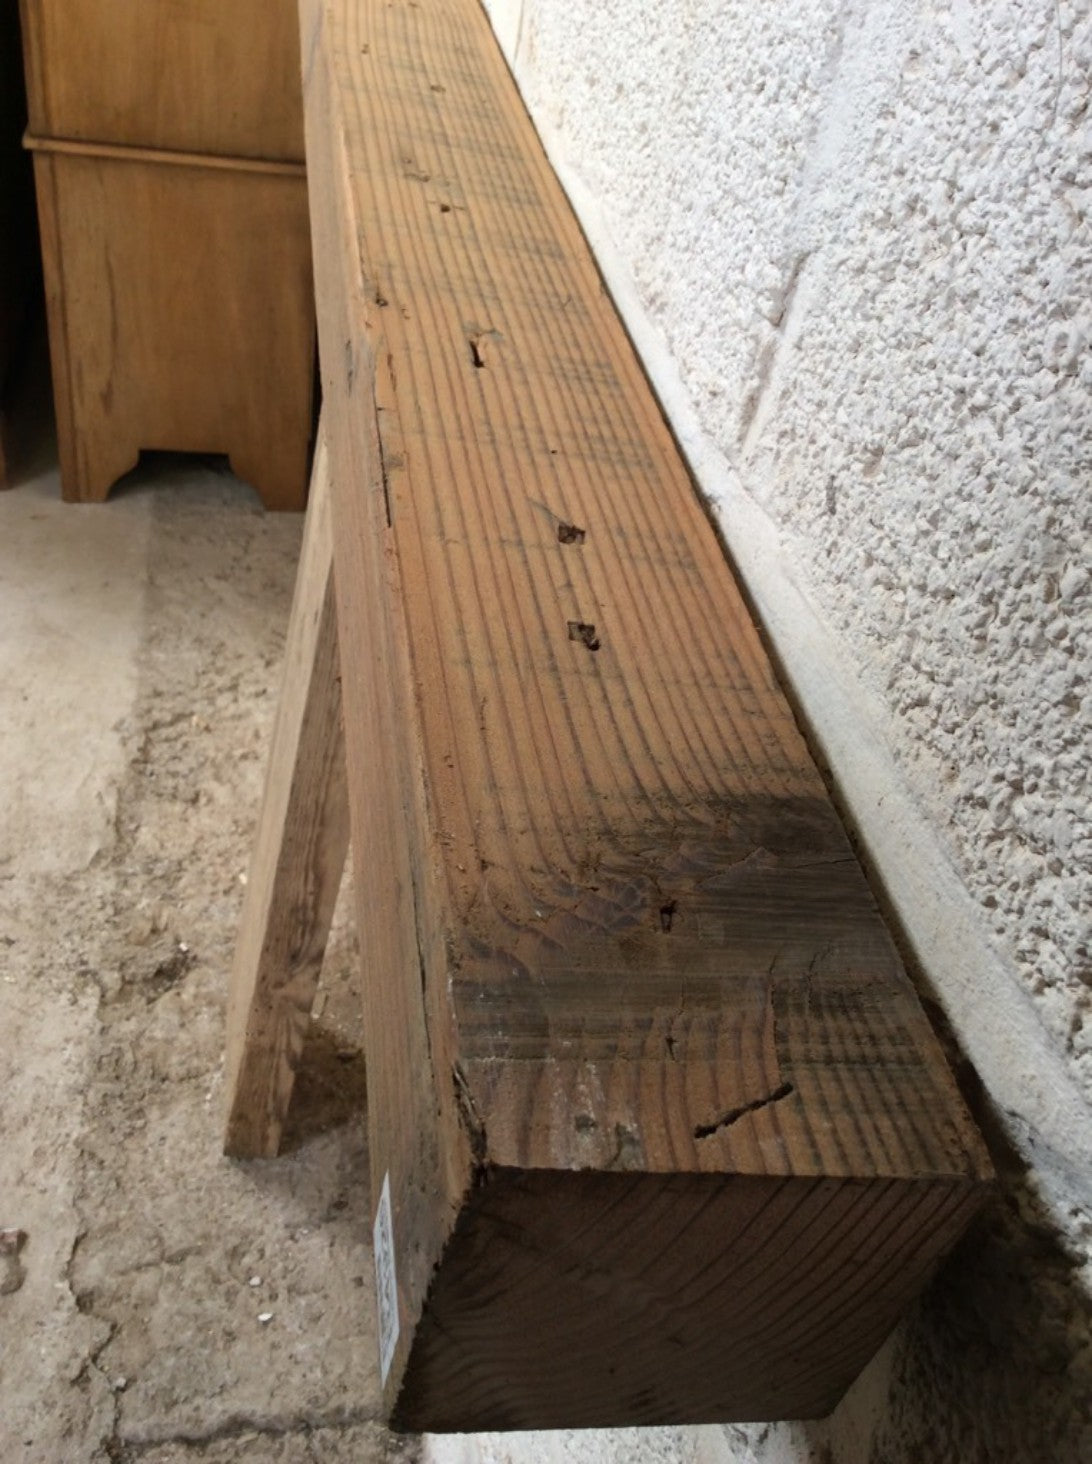 4ft 2 3/8" Or 1.28m Long Old Reclaimed Rustic Pine Mantel Shelf